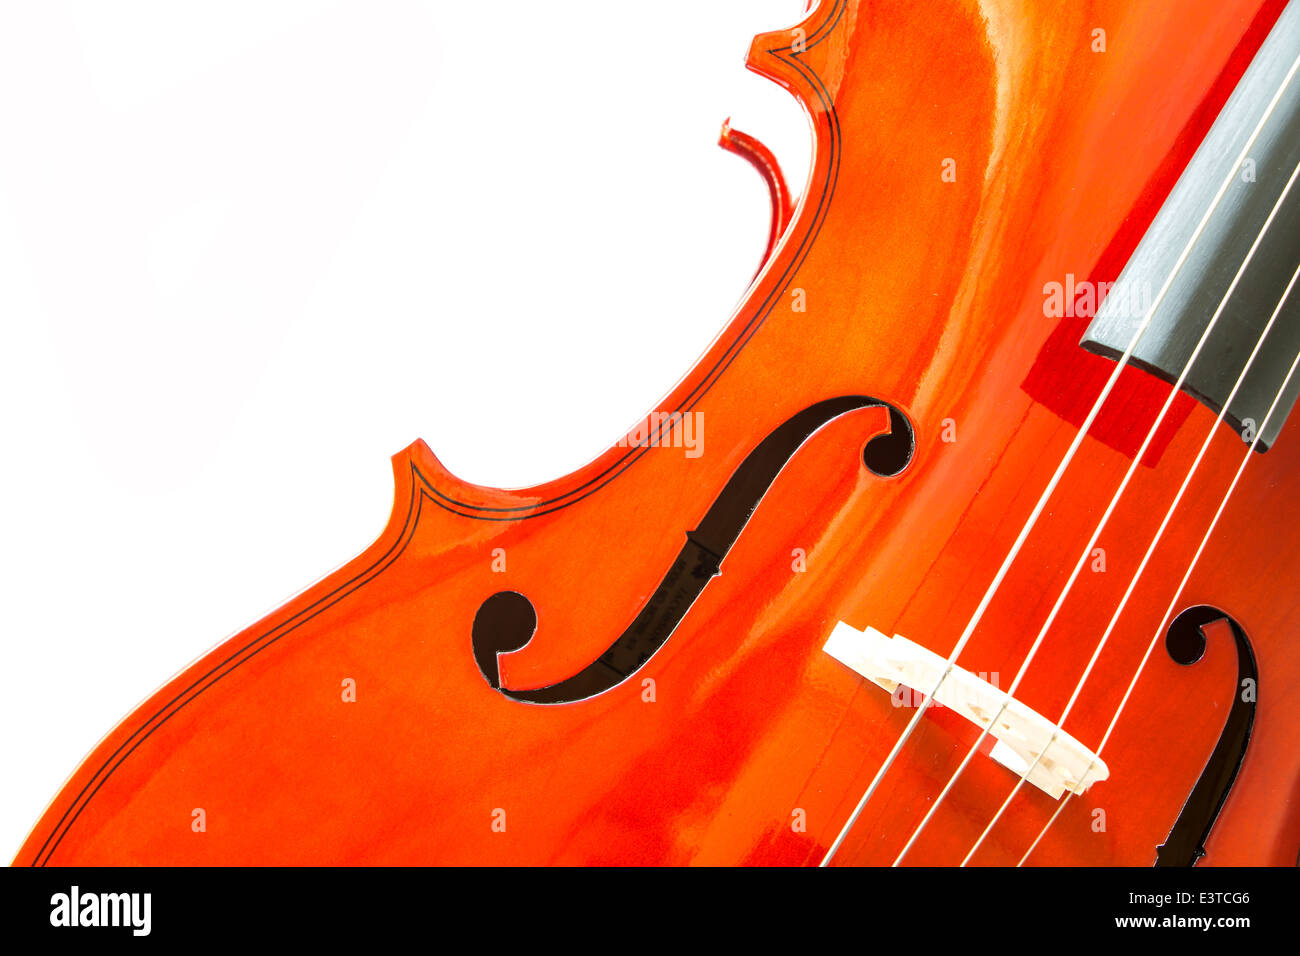 Violin on white background Stock Photo